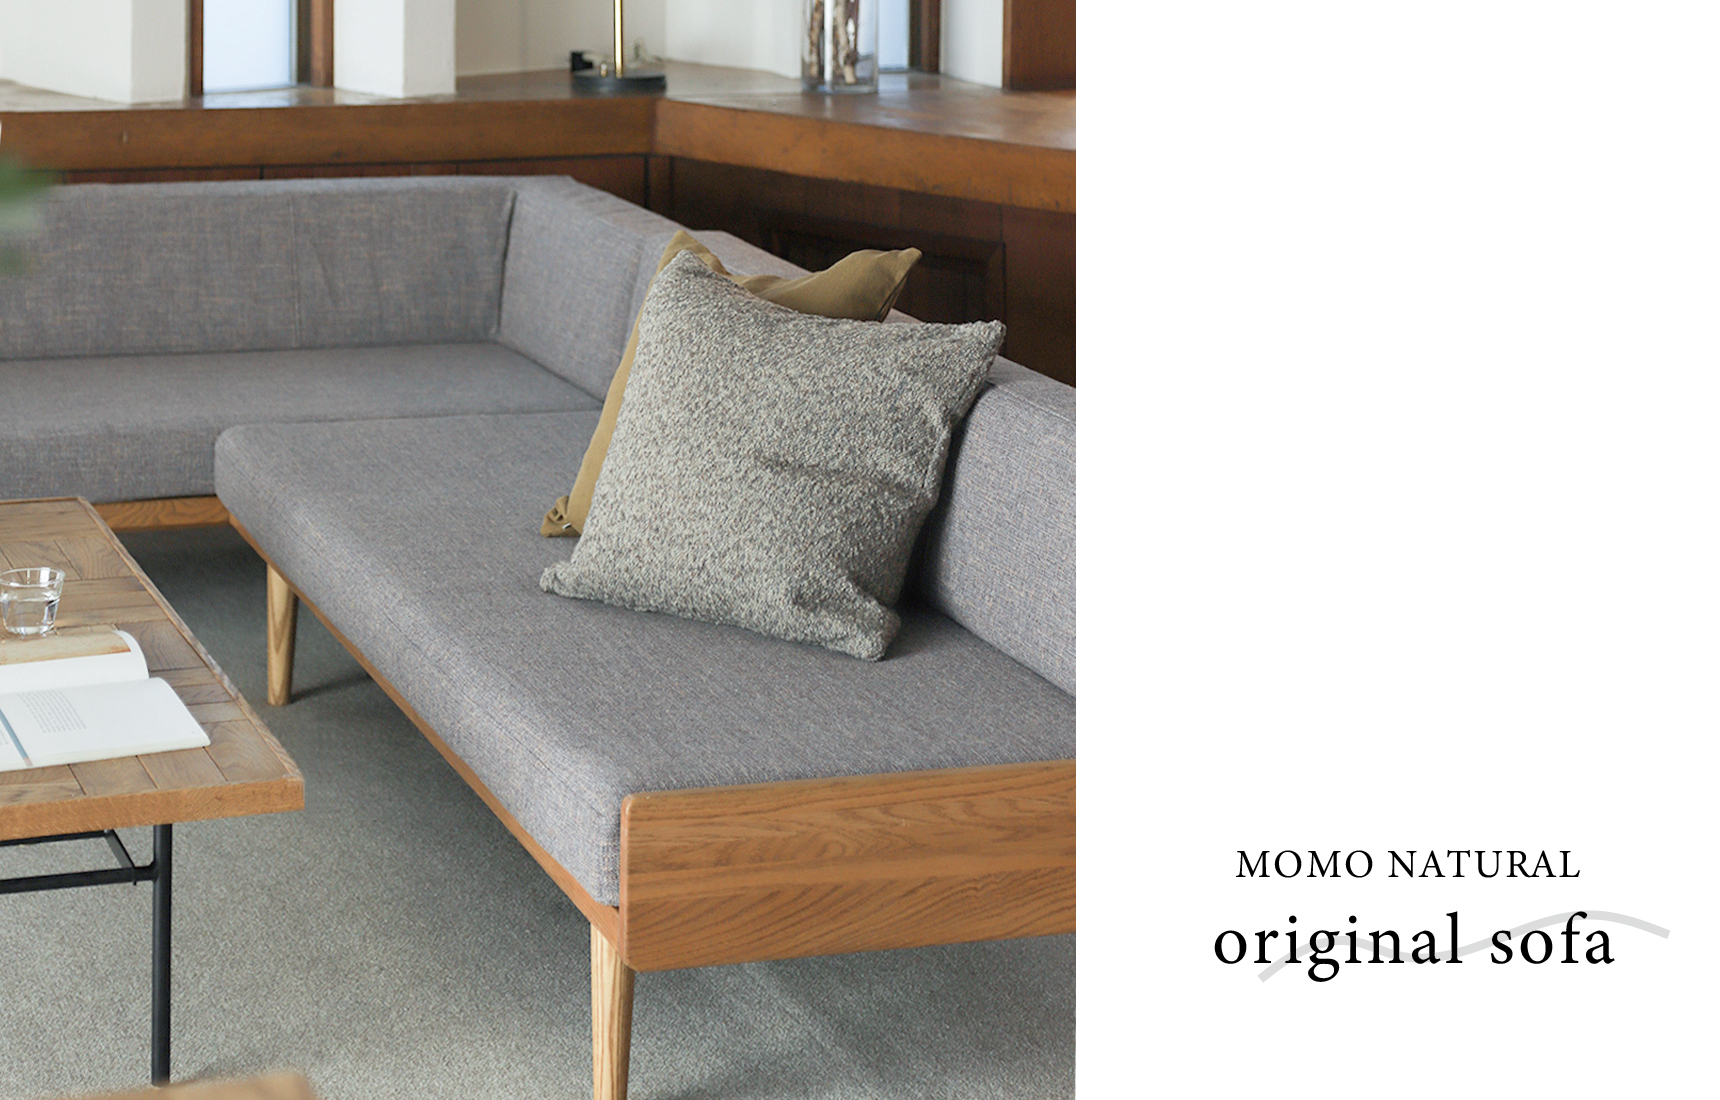 MOMO NATURAL original sofa